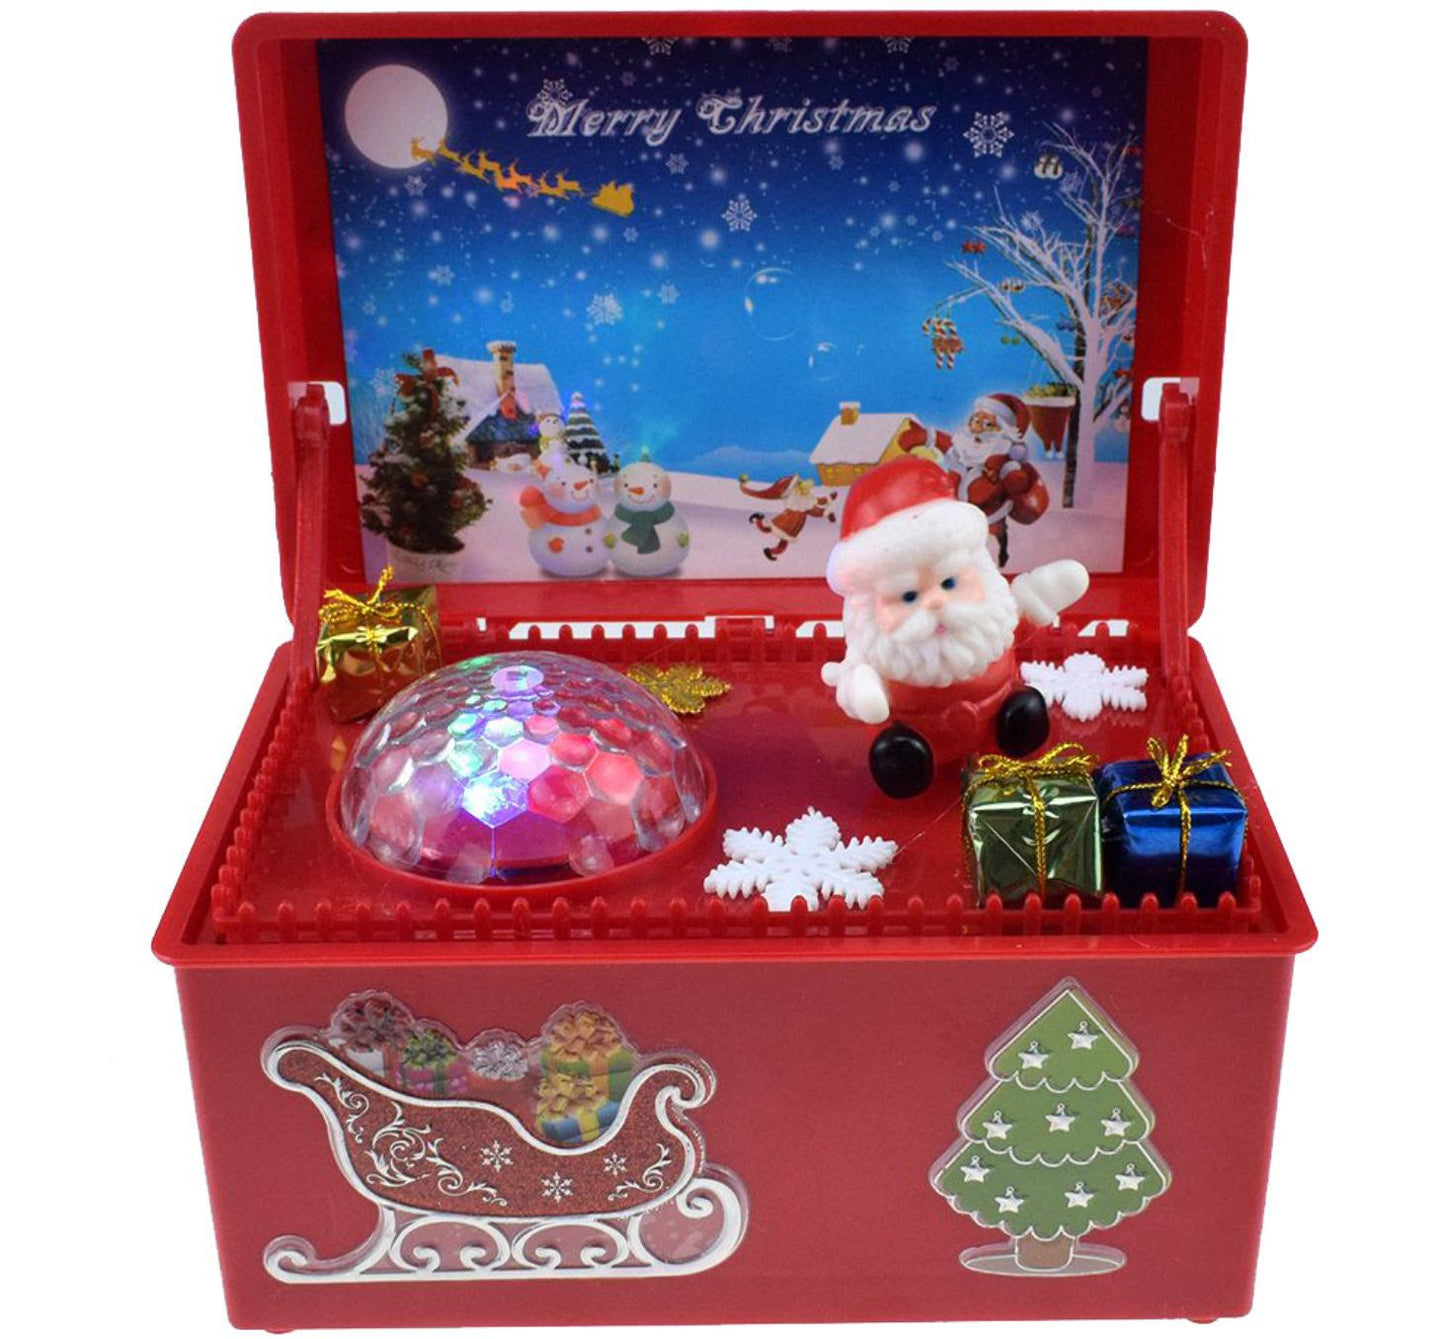 Electric lift Christmas music gift box